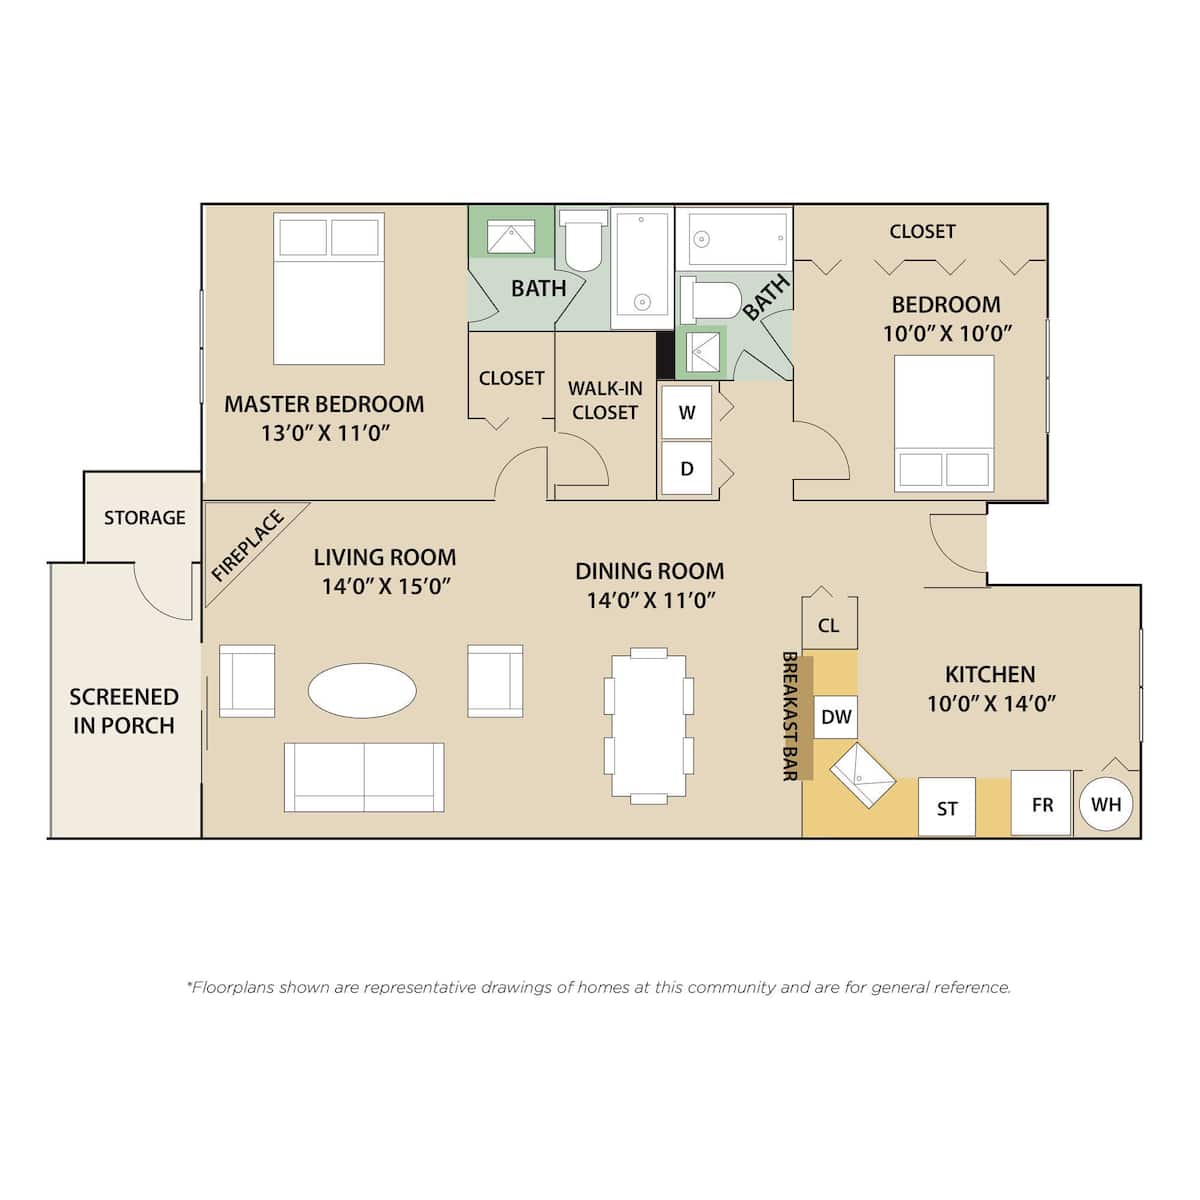 Floorplan diagram for Murfield, showing 2 bedroom